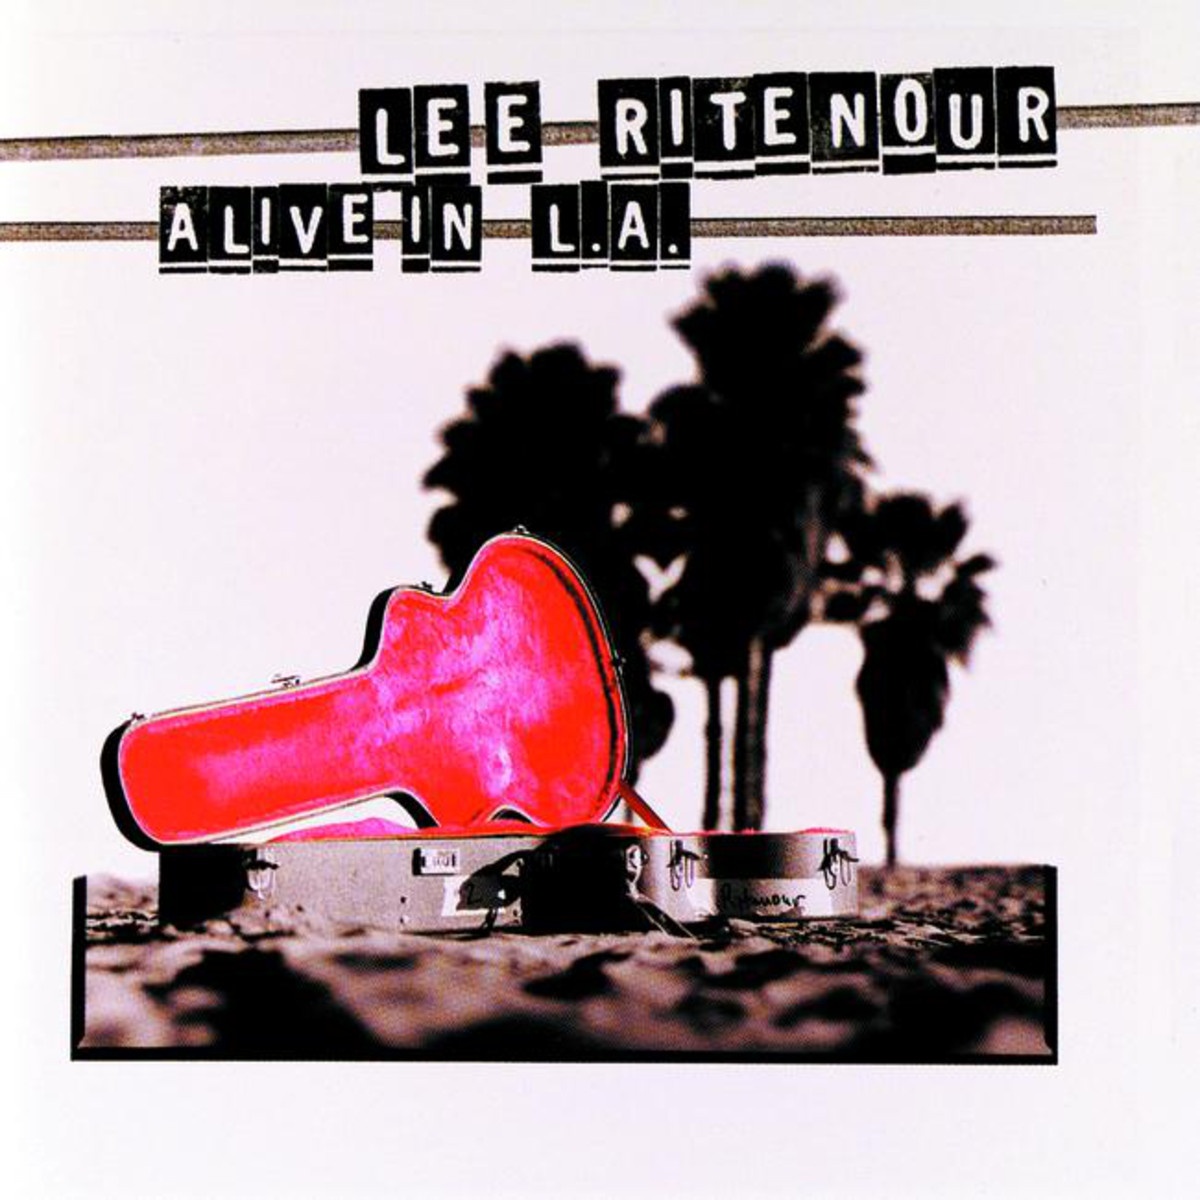 A Little Bumpin' - Live (1997 Ash Grove In Santa Monica)